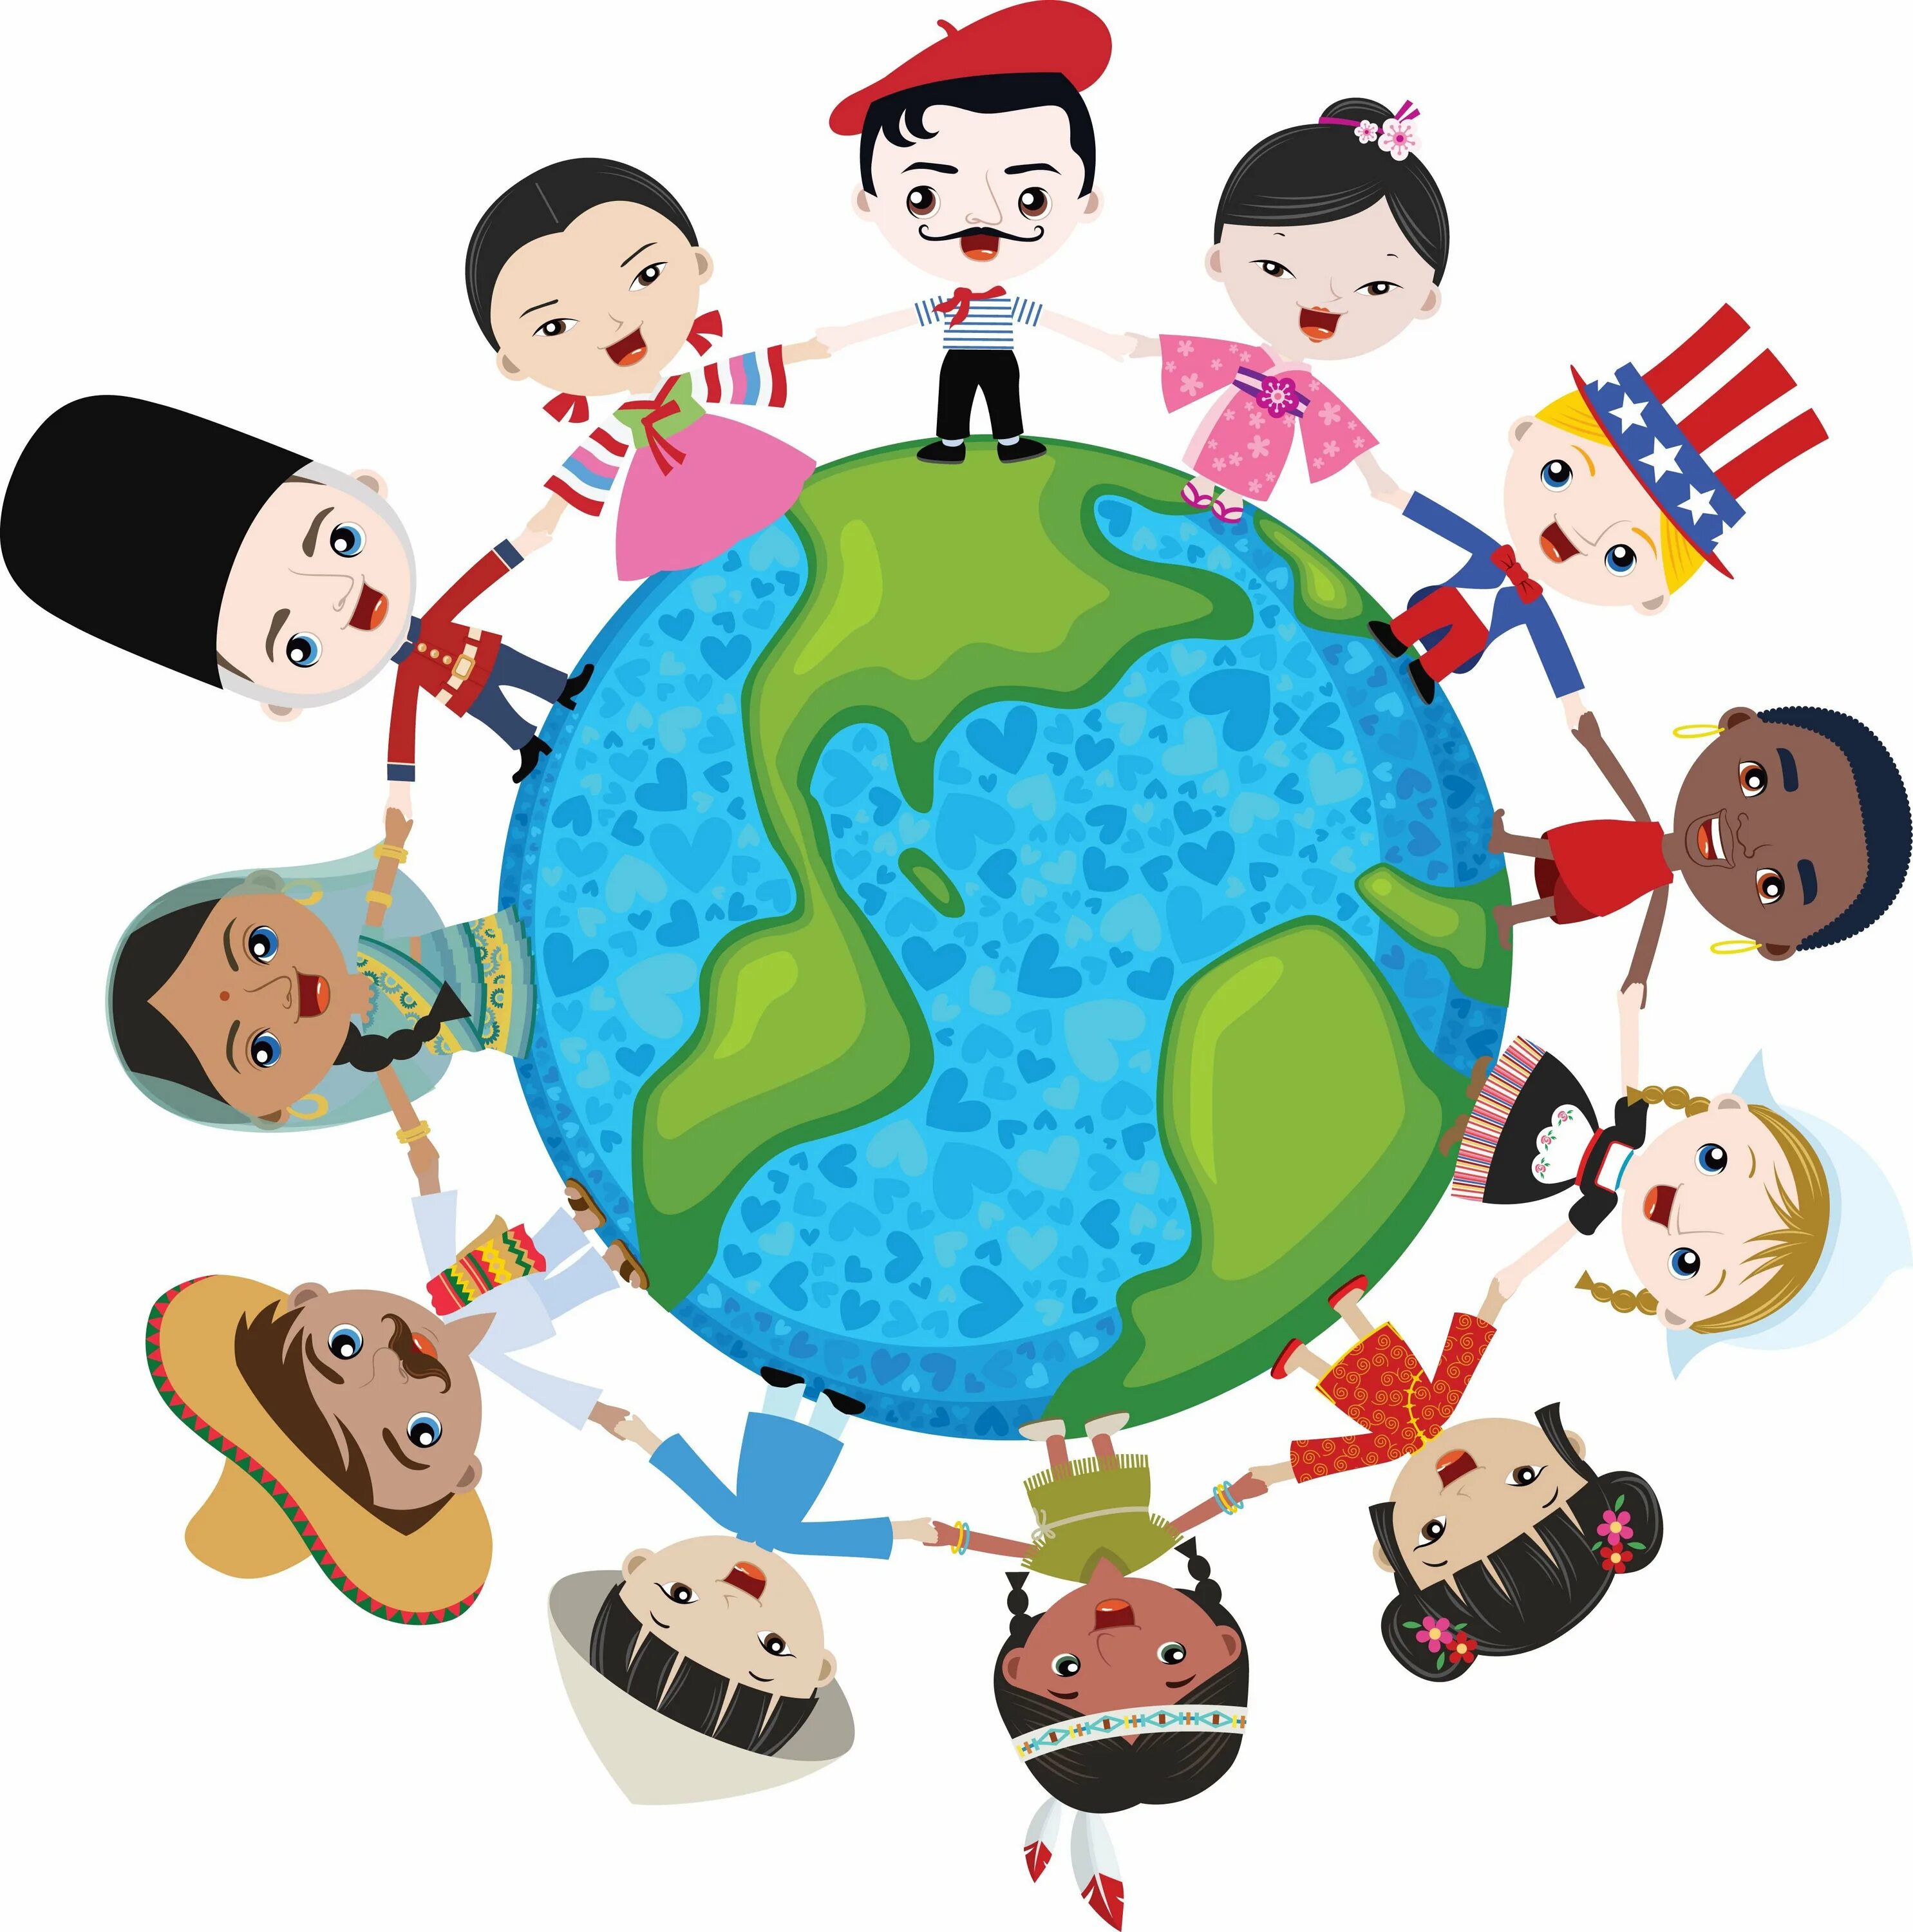 Дружба народов на земном шаре. Дети на земном шаре. Разные нации на земном шаре. Дети разных народов вокруг земного шара.